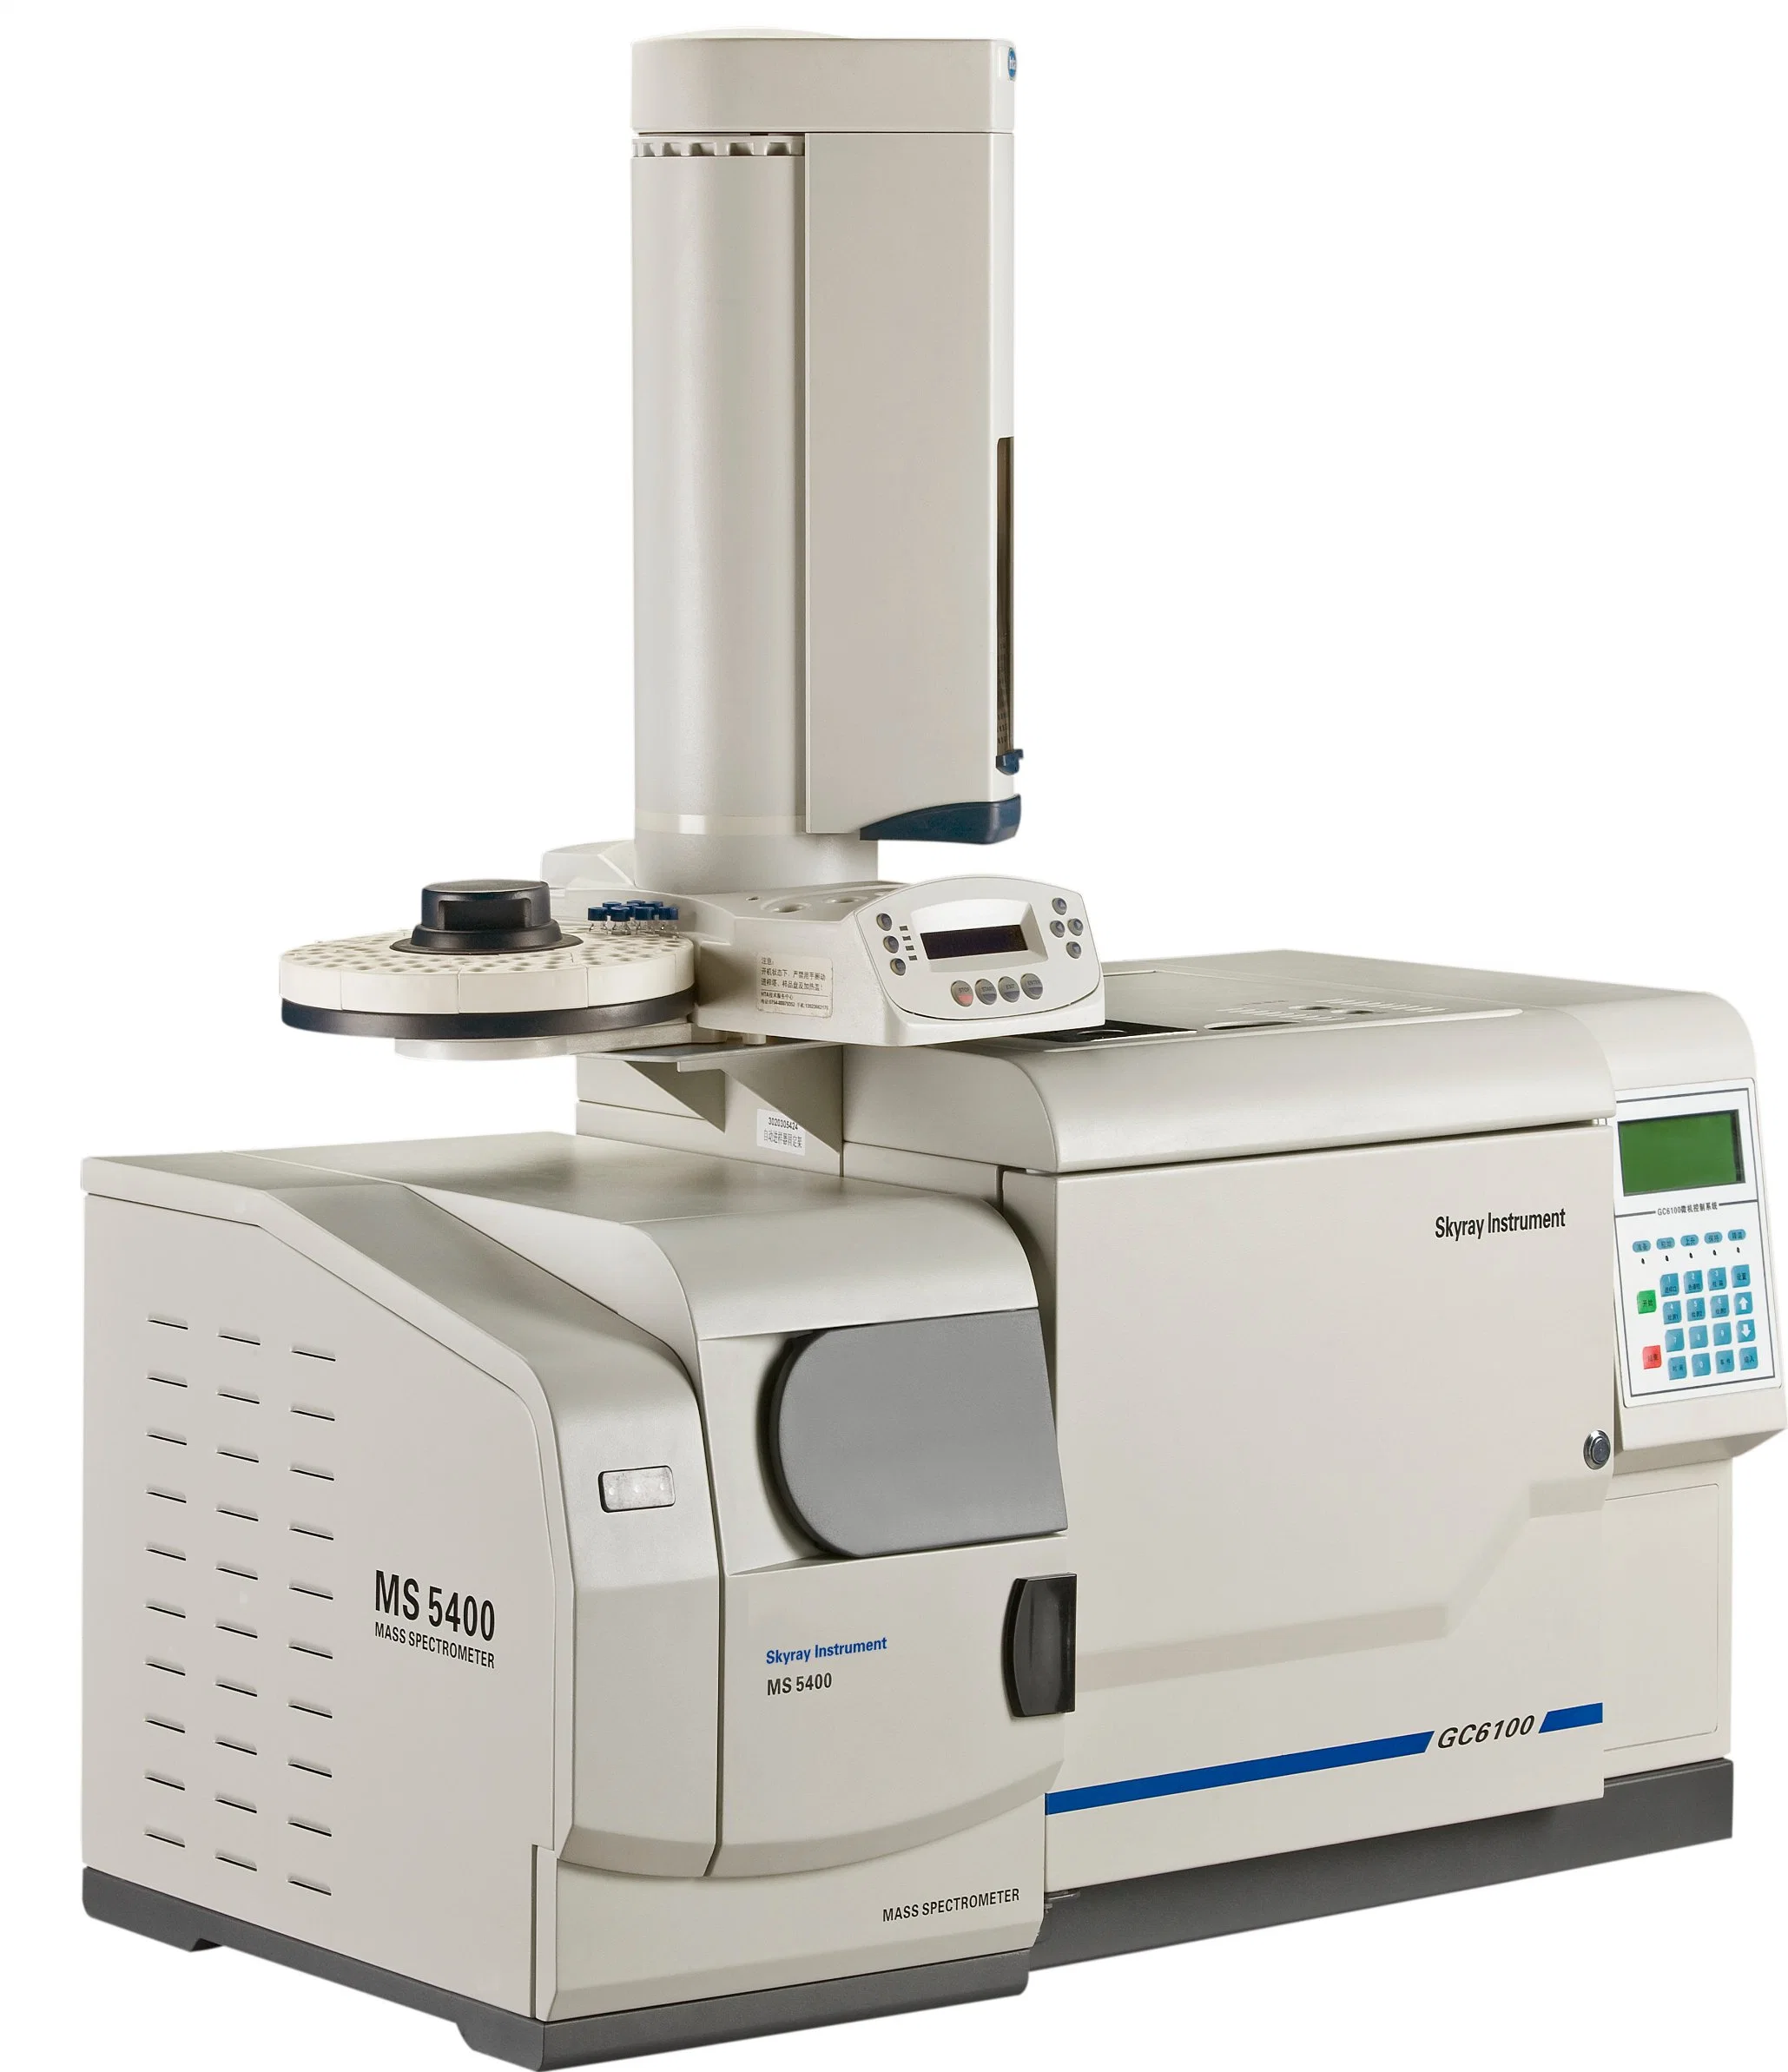 Gas Chromatograph Mass Spectrometer Gc-Ms